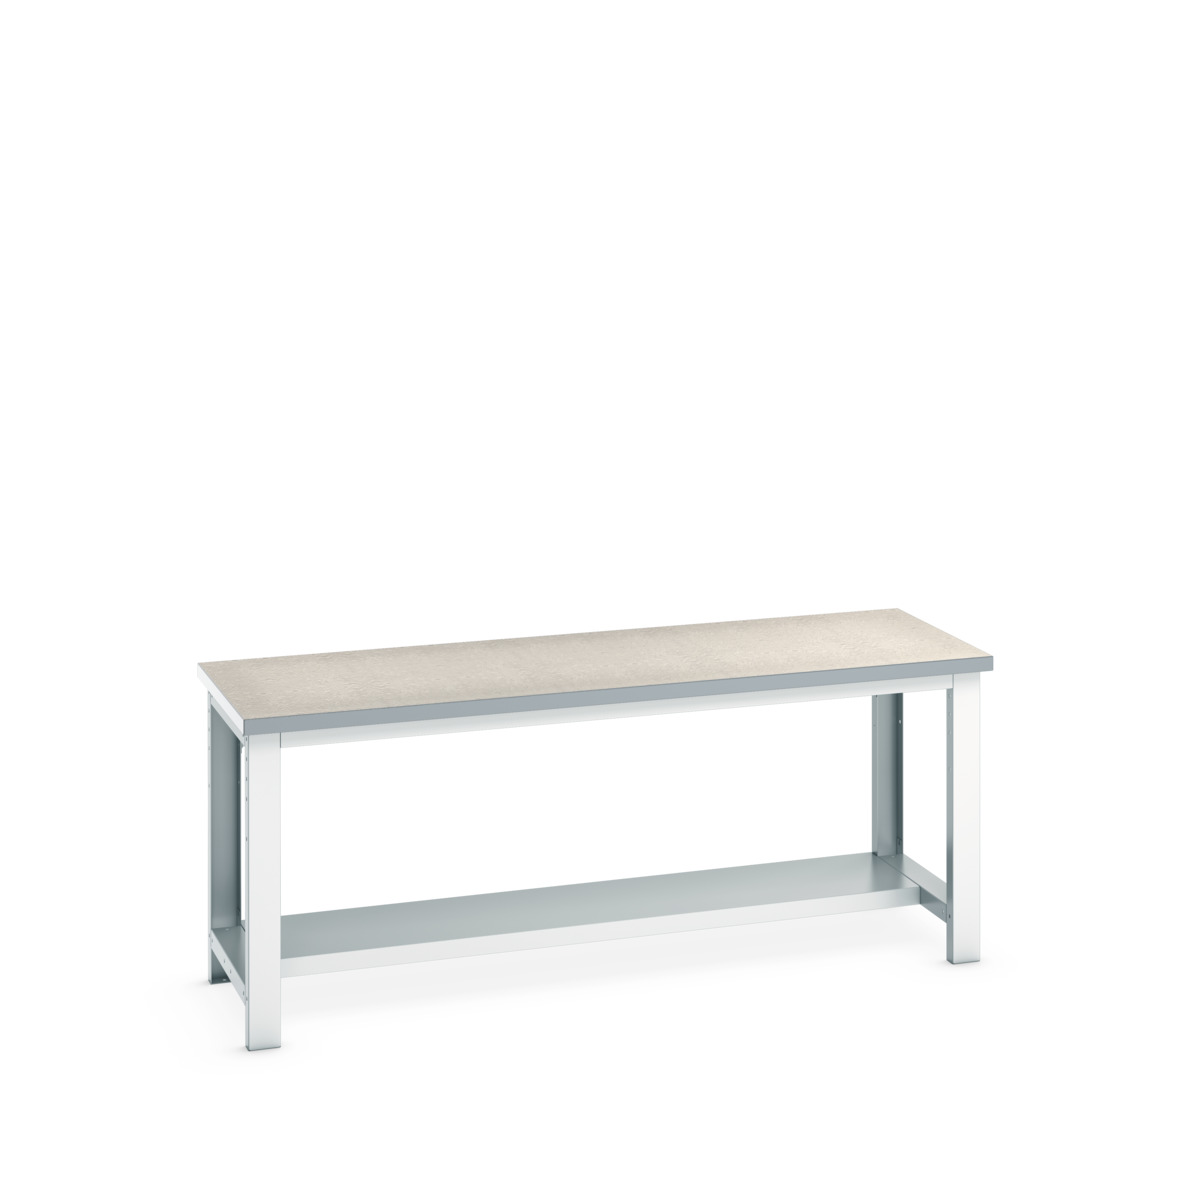 41003183. - cubio framework bench (lino)